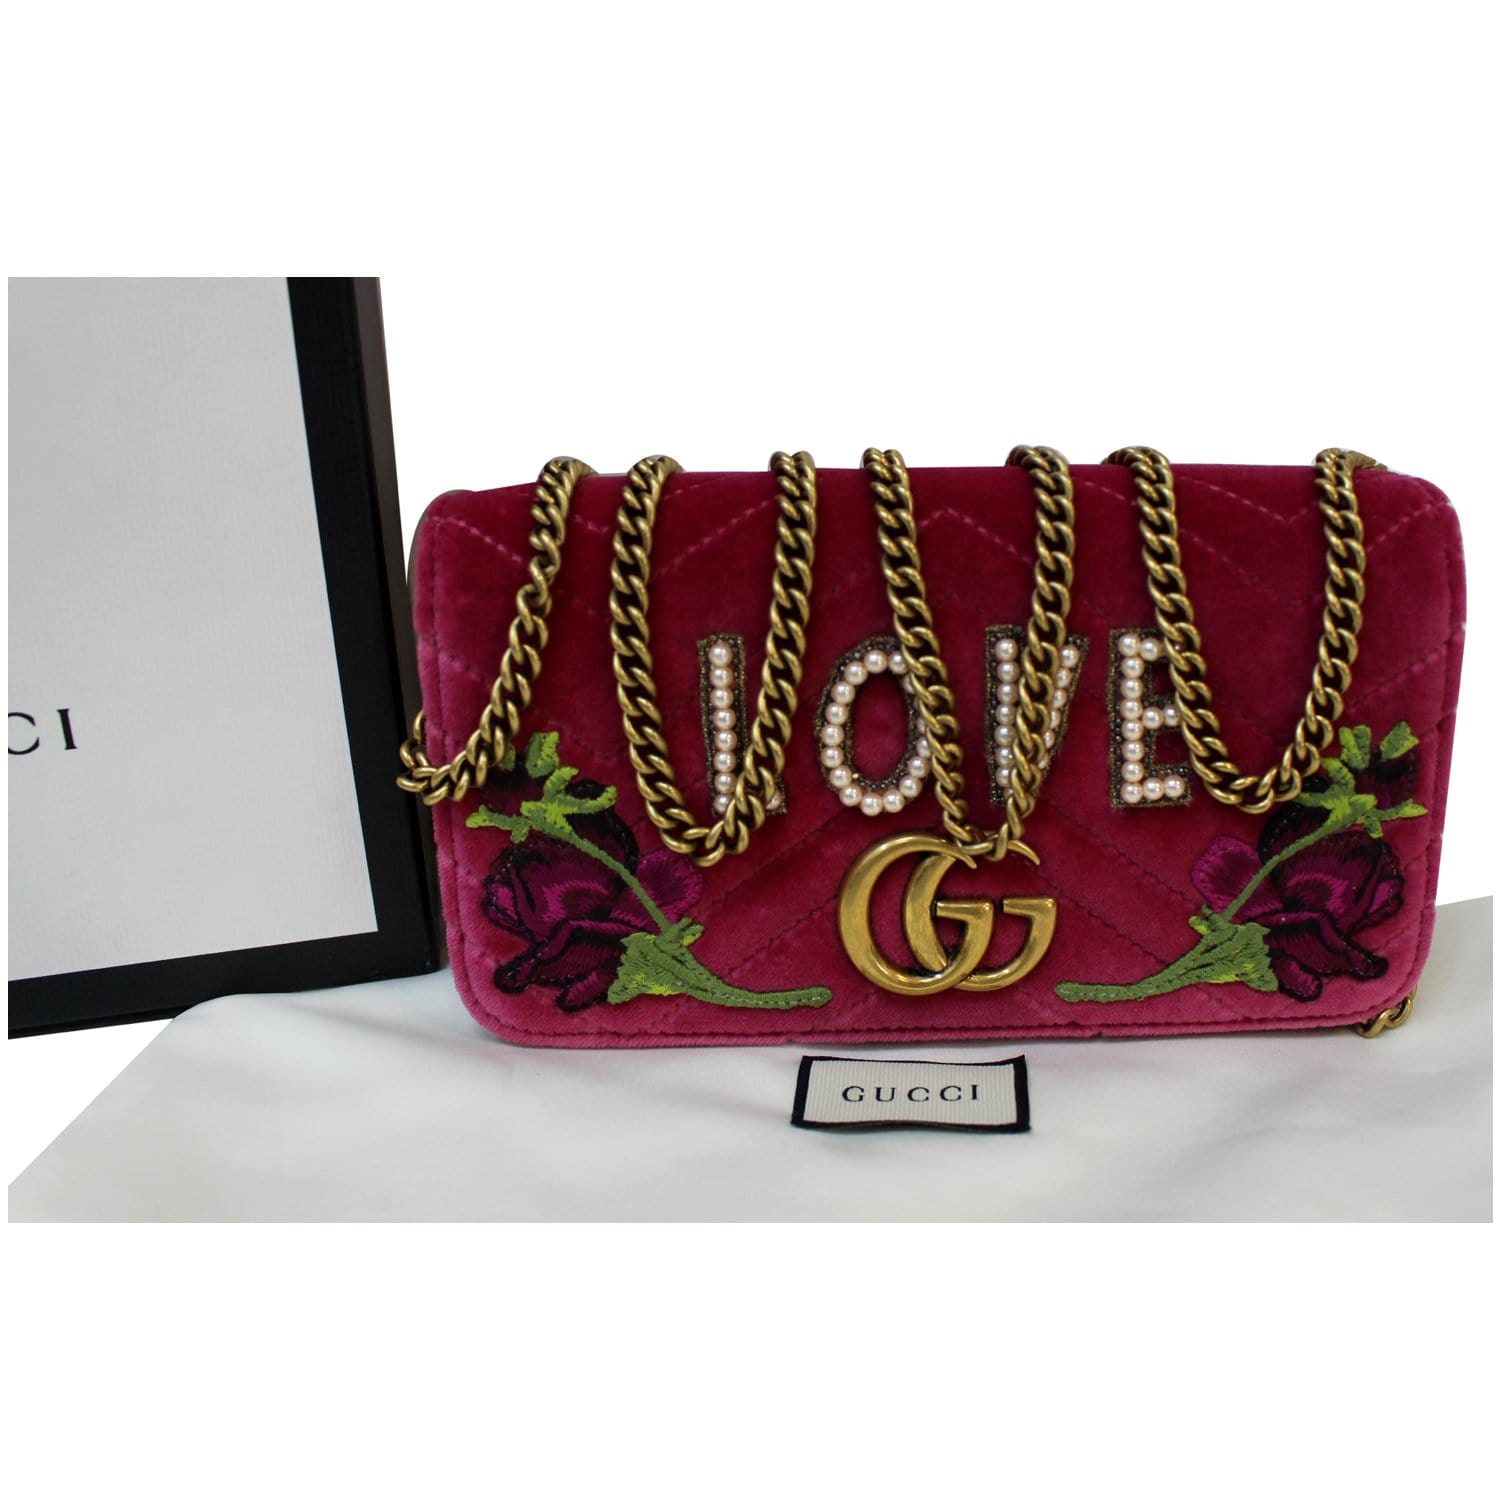 Love a Gucci . Cutest little shoulder bag here. #guccibag #guccilover